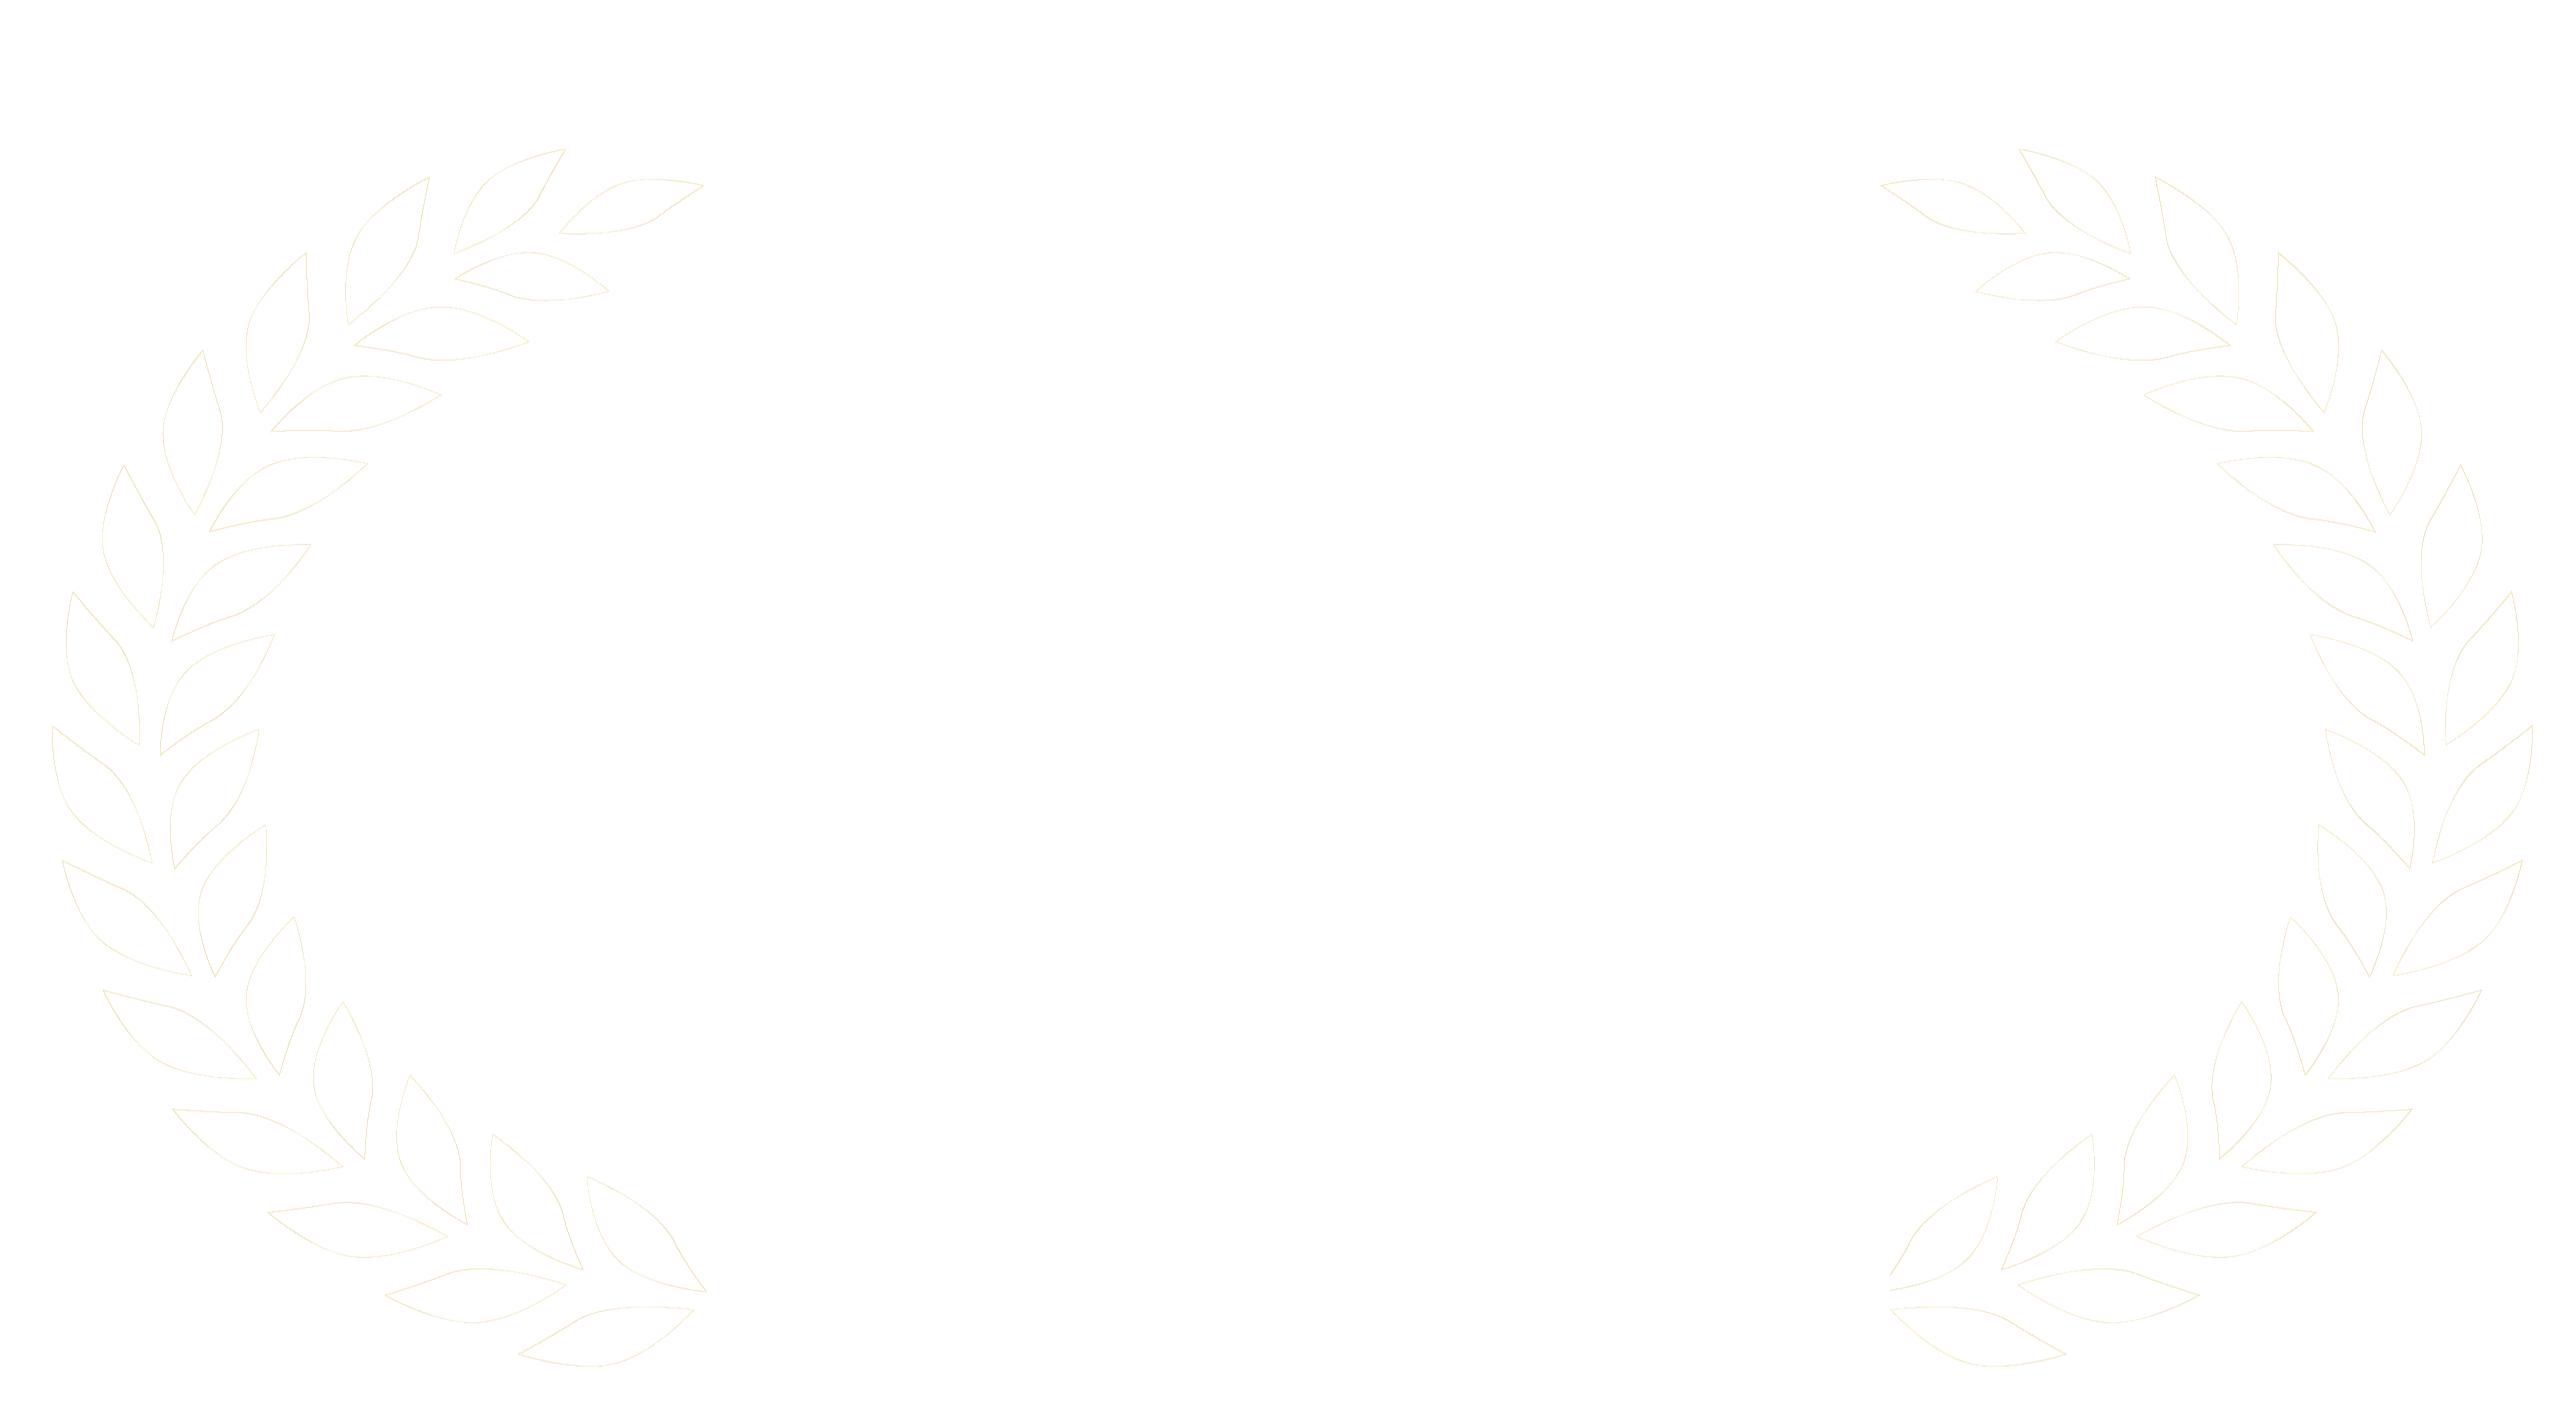 Holborn Assets